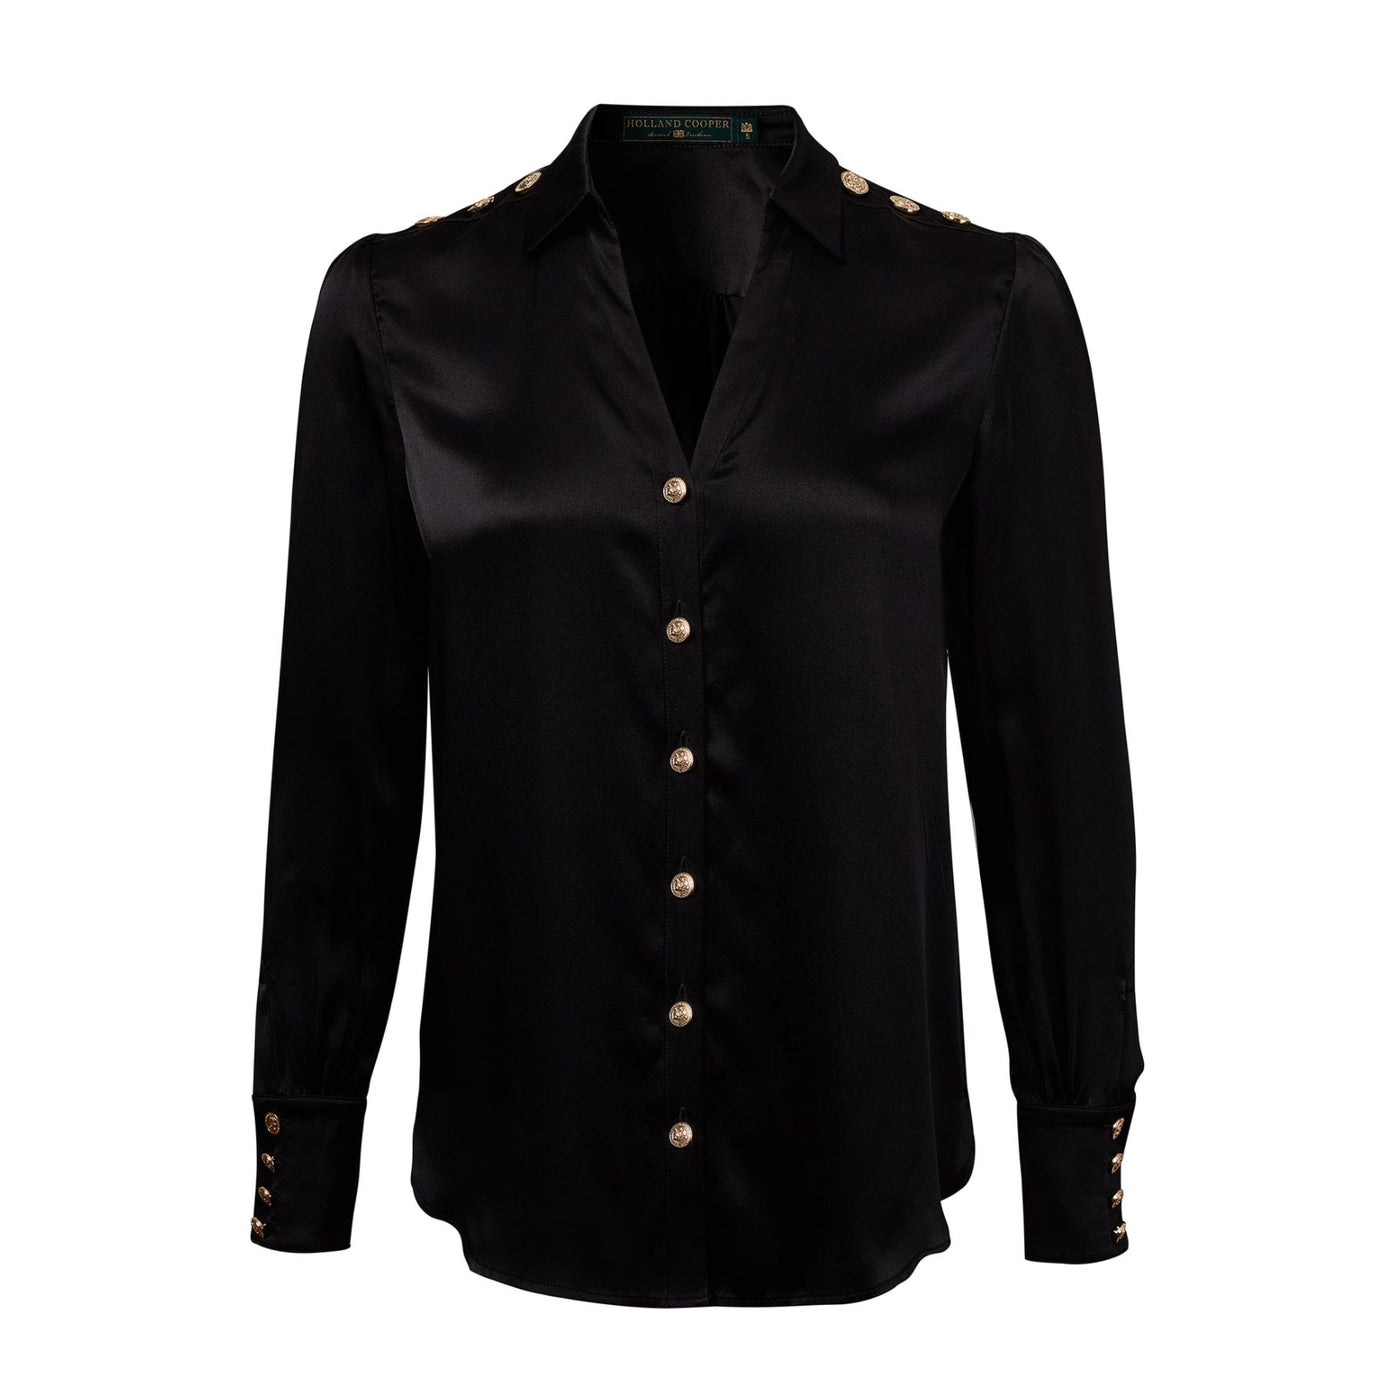 Holland Cooper Silk V-Neck Ladies Blouse in Black